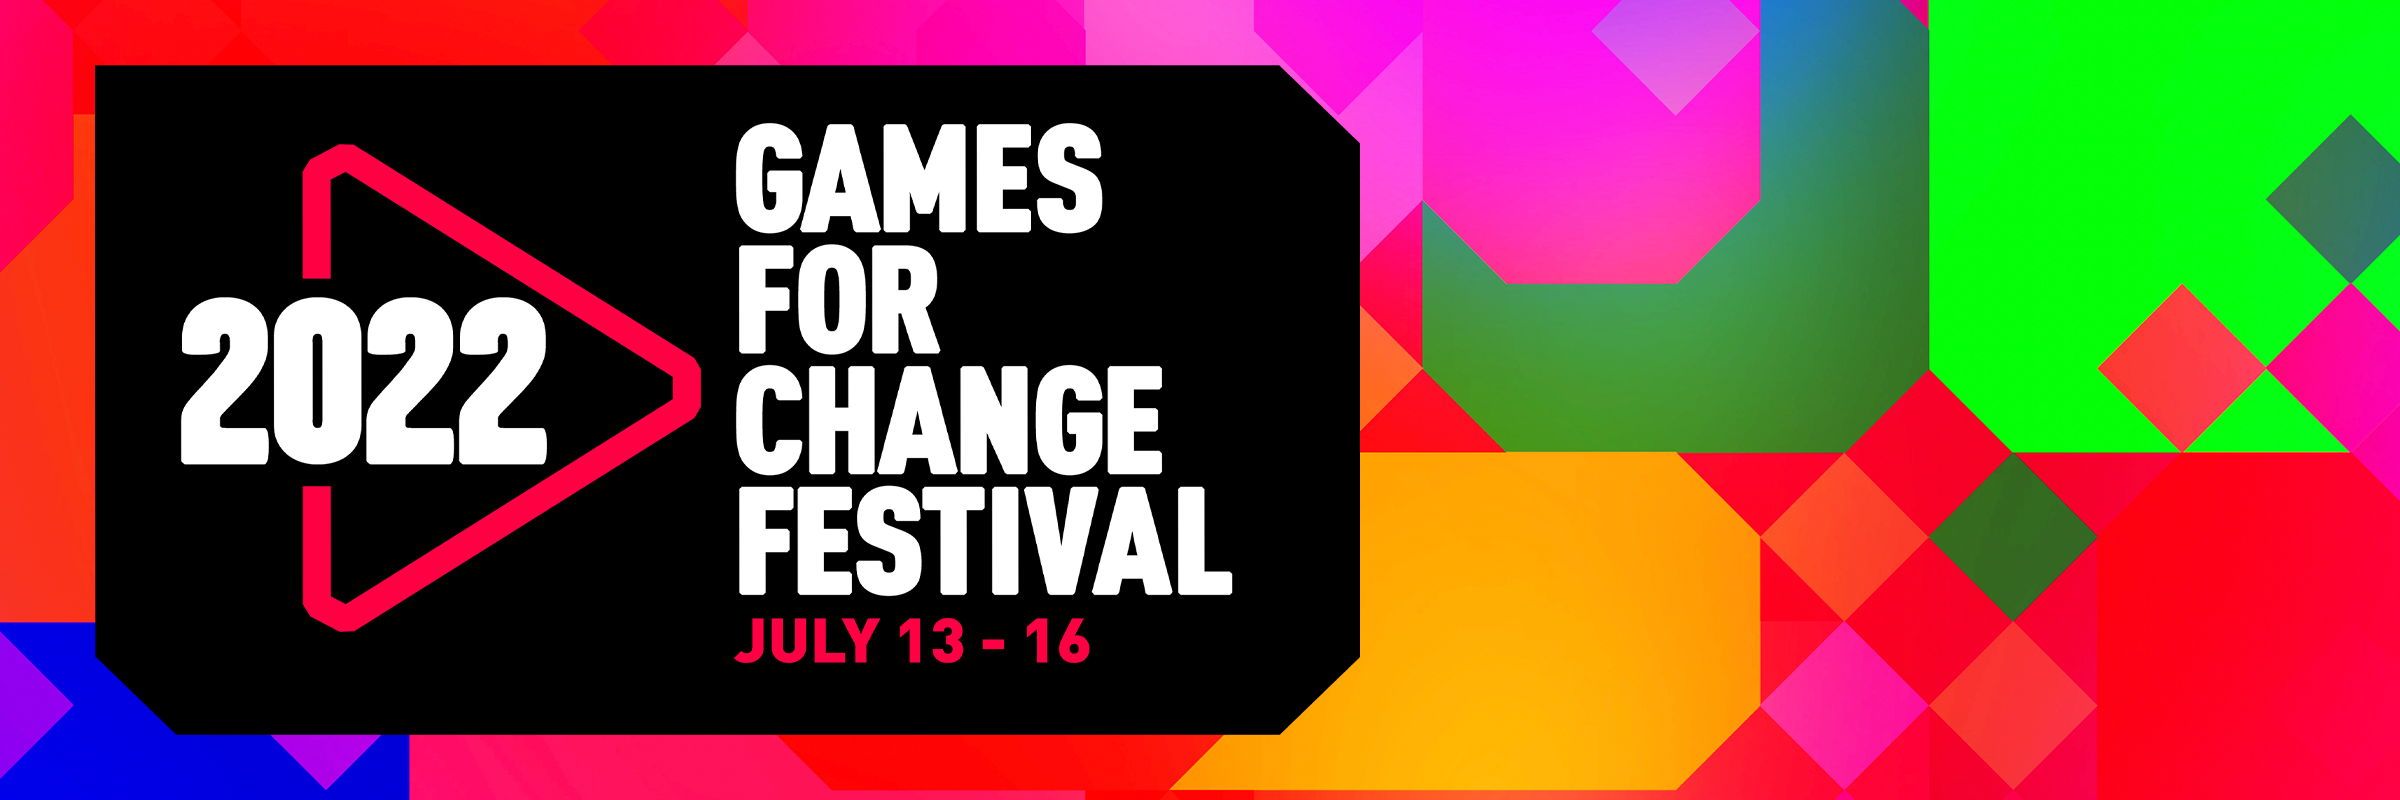 Games for Change Festival